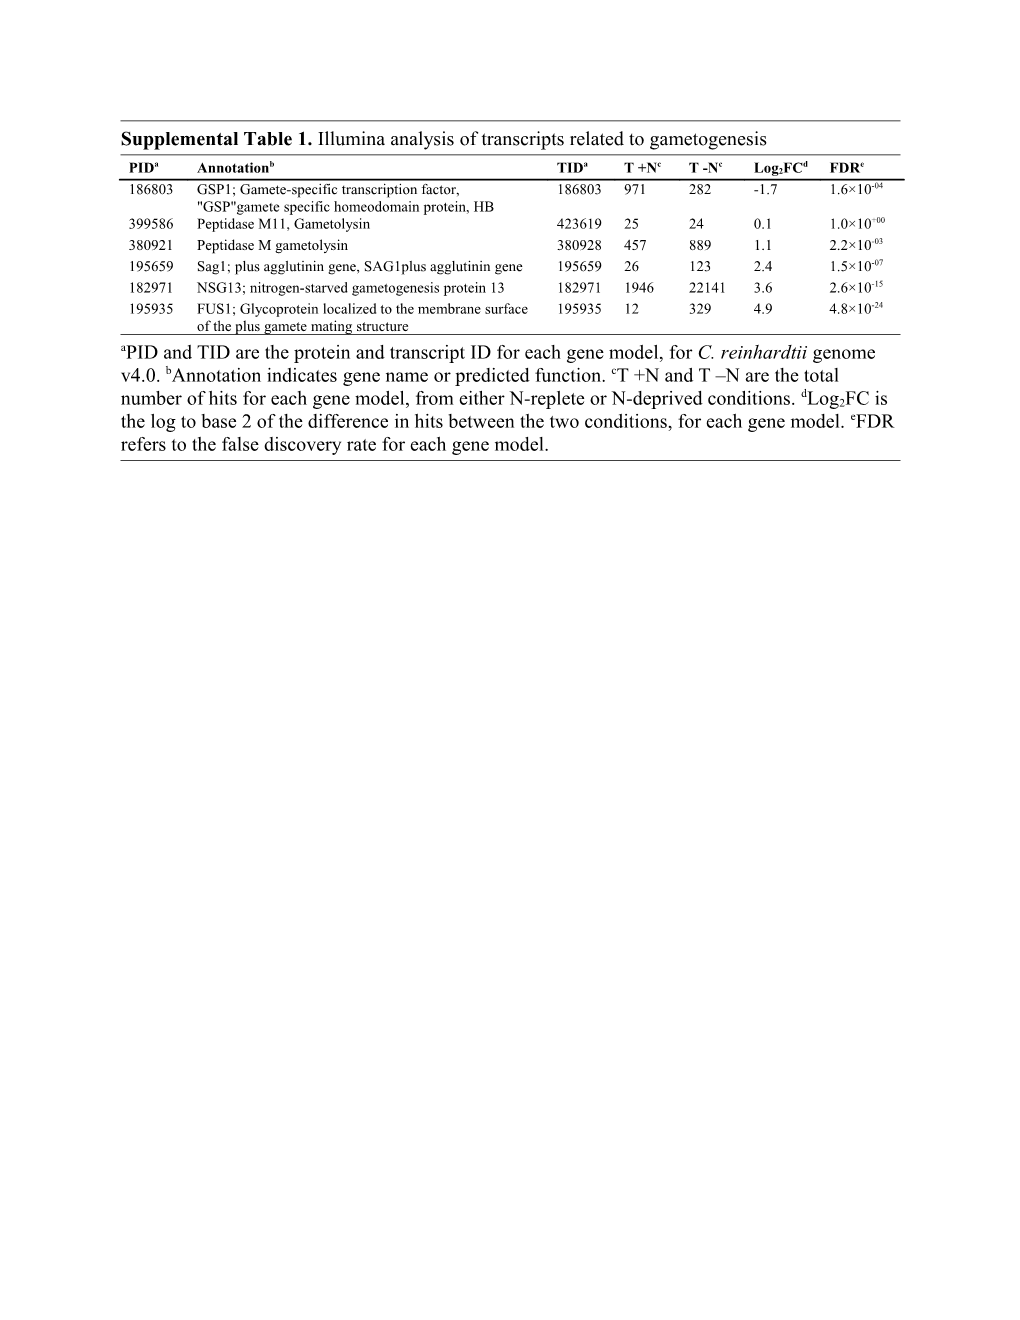 Supplemental Table 1. Illumina Analysis of Transcripts Related to Gametogenesis